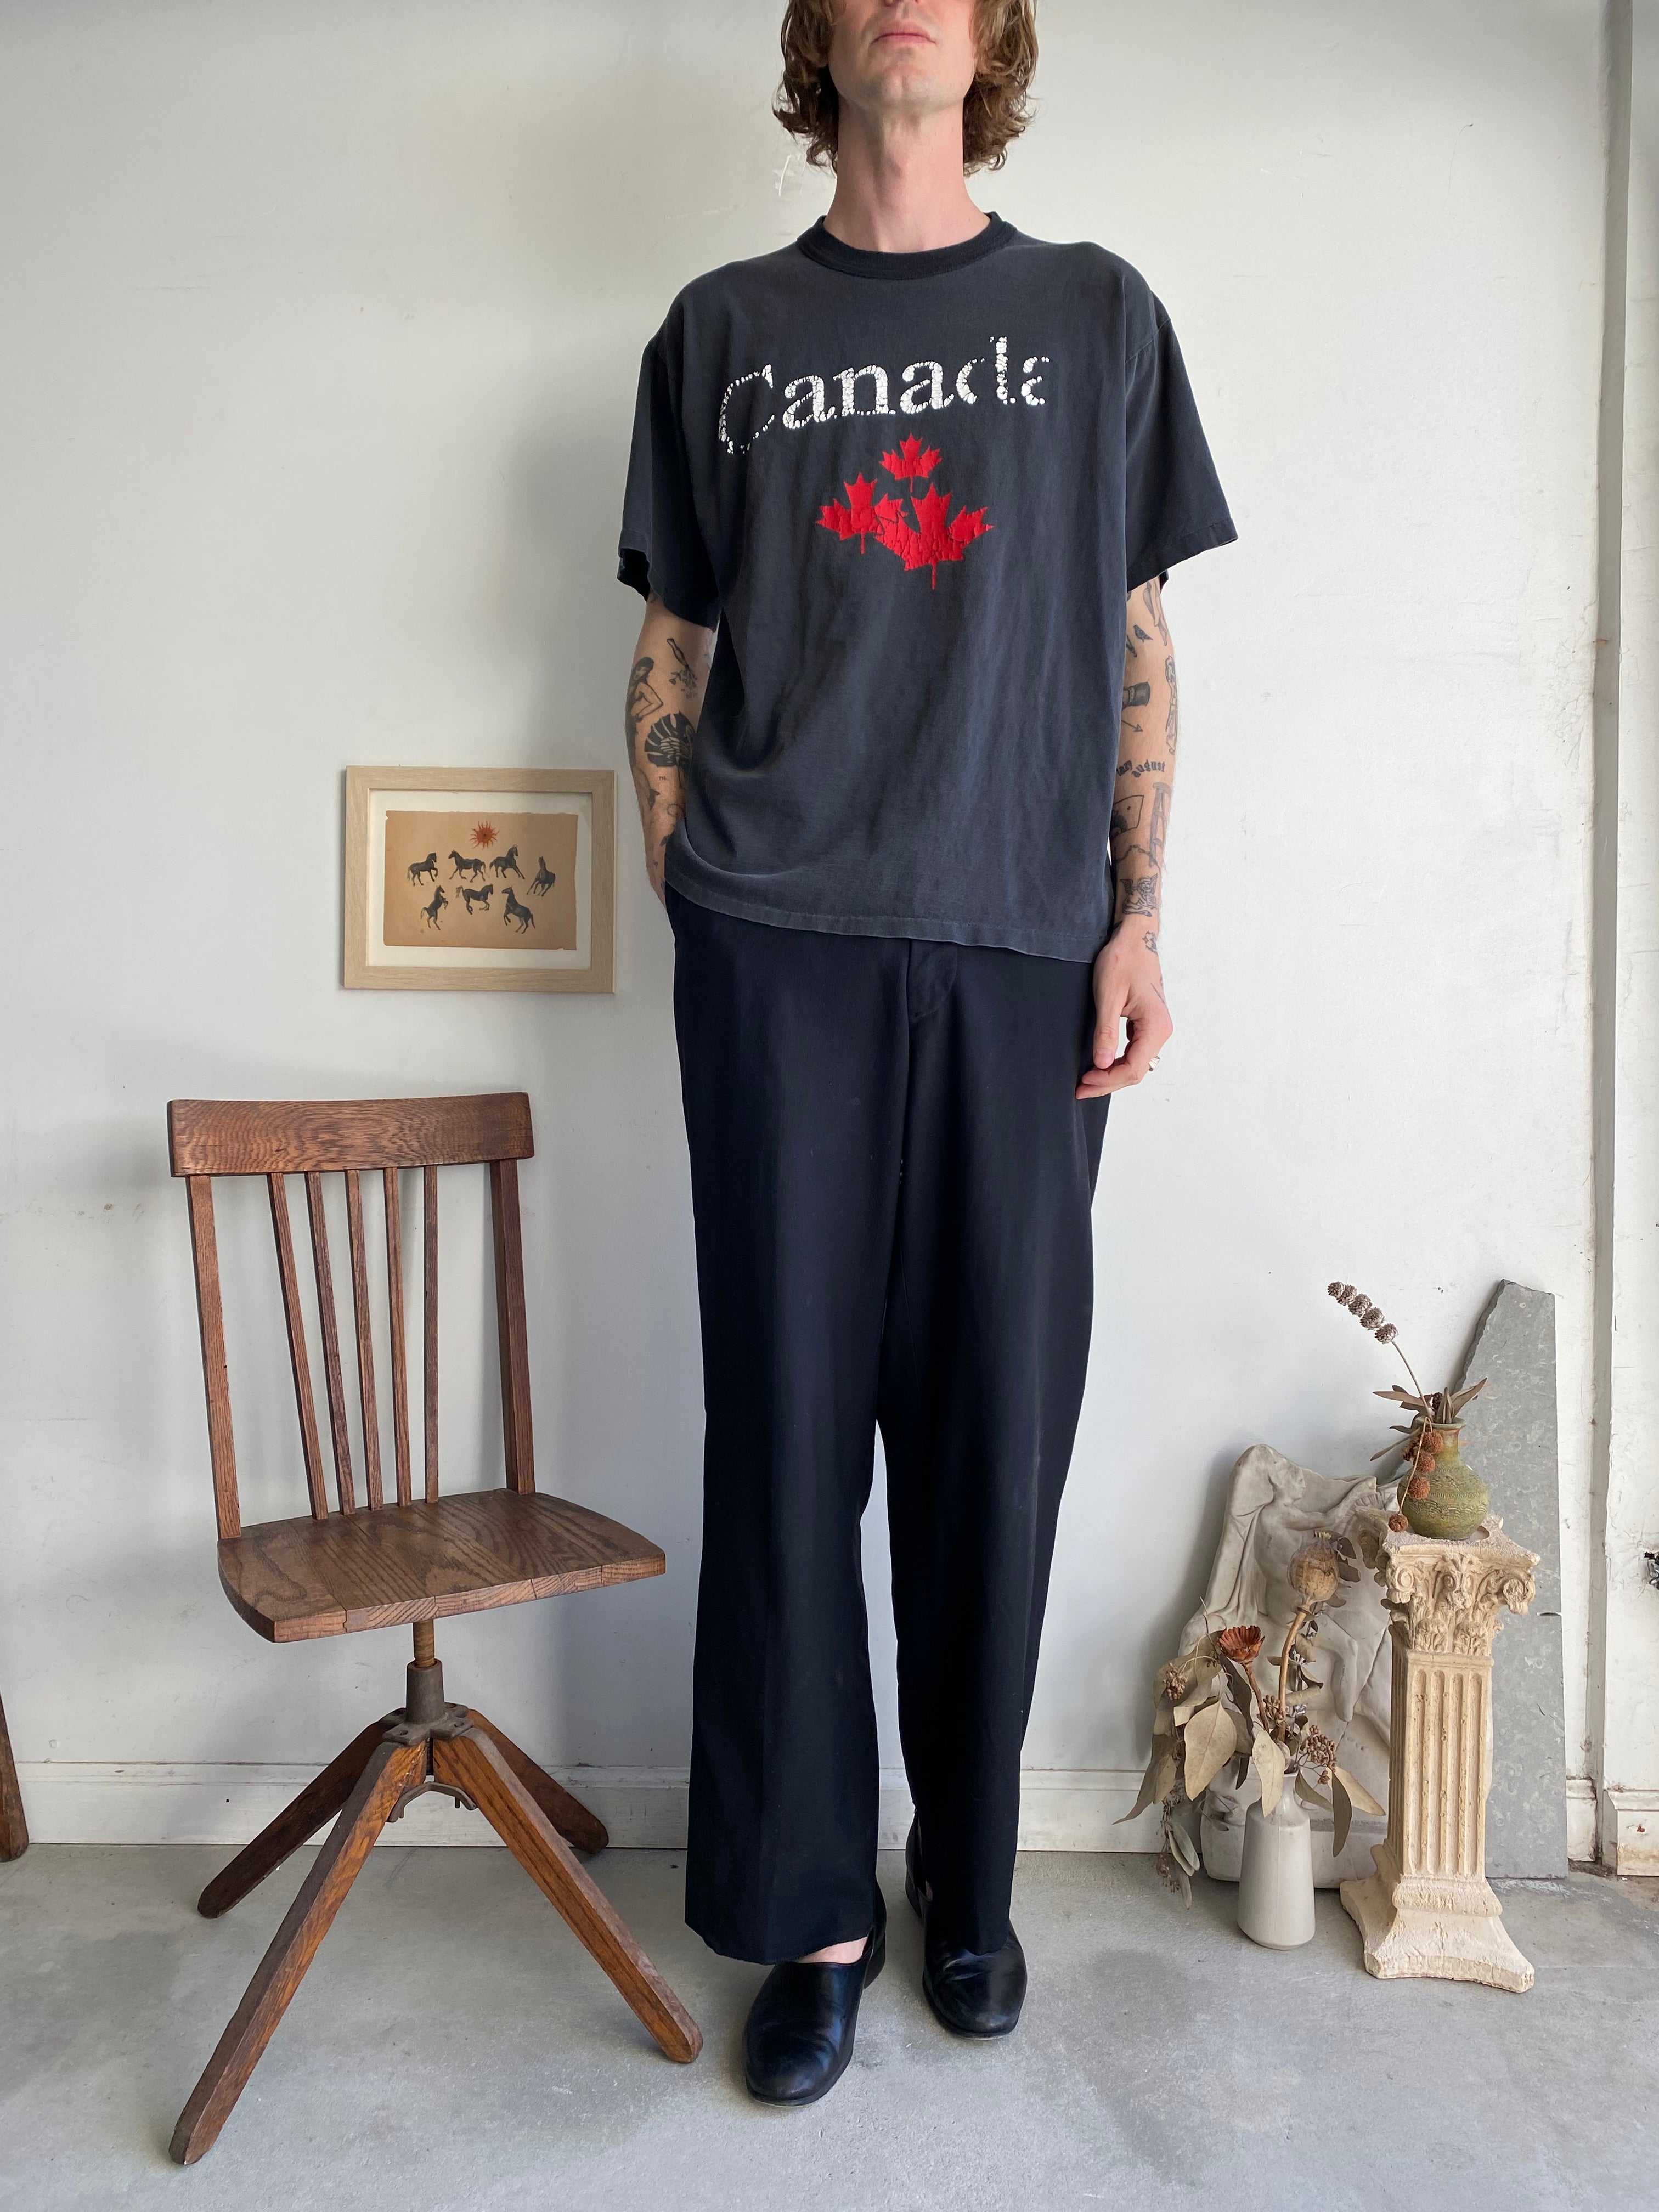 1990s Canada T-Shirt (Boxy M/L)